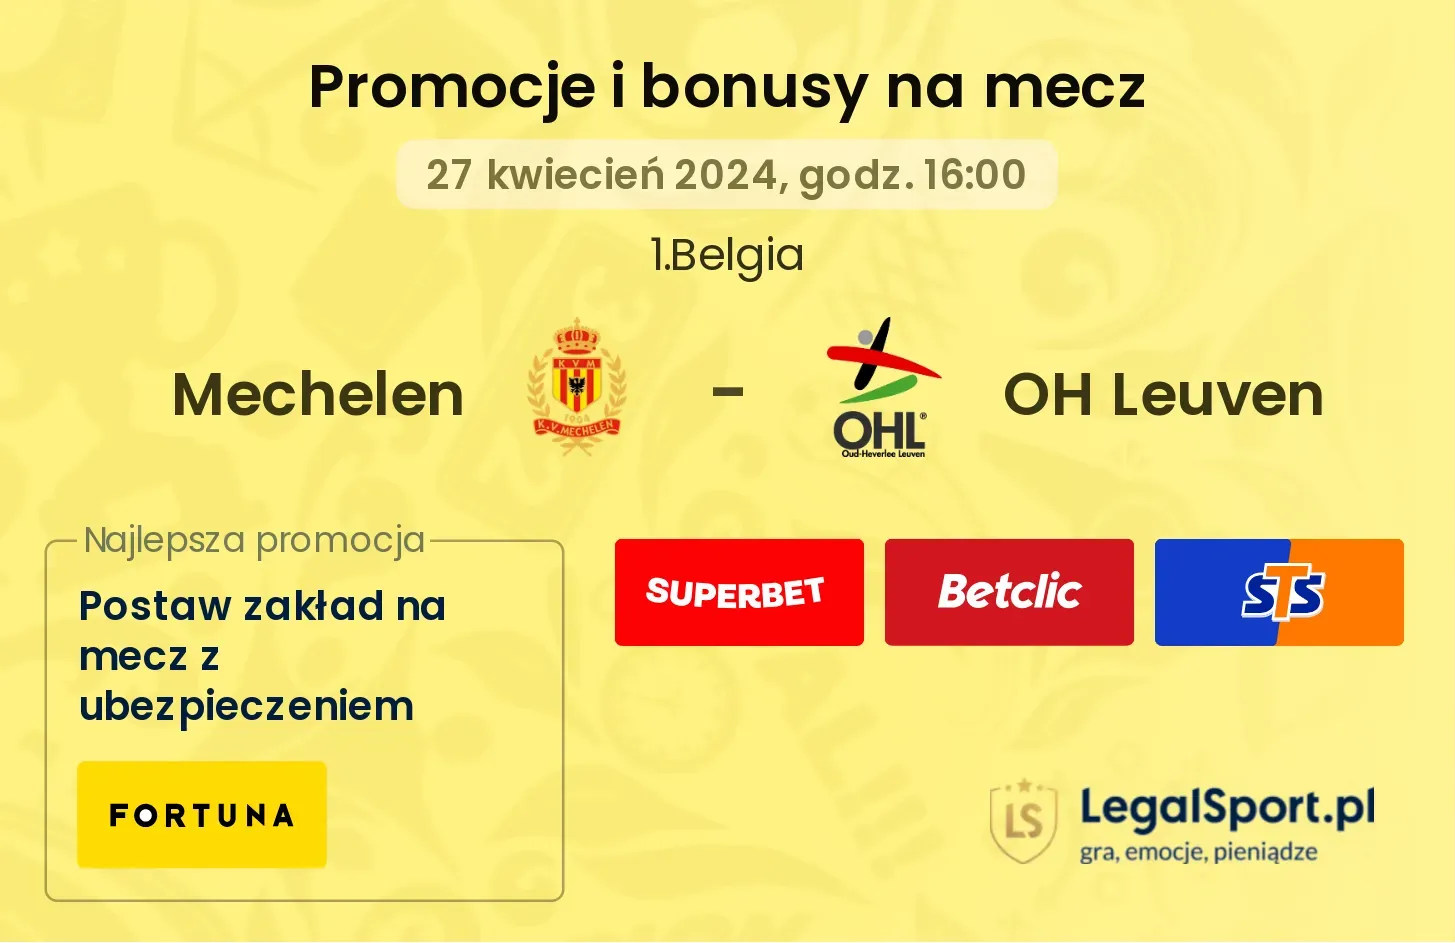 Mechelen - OH Leuven promocje bonusy na mecz